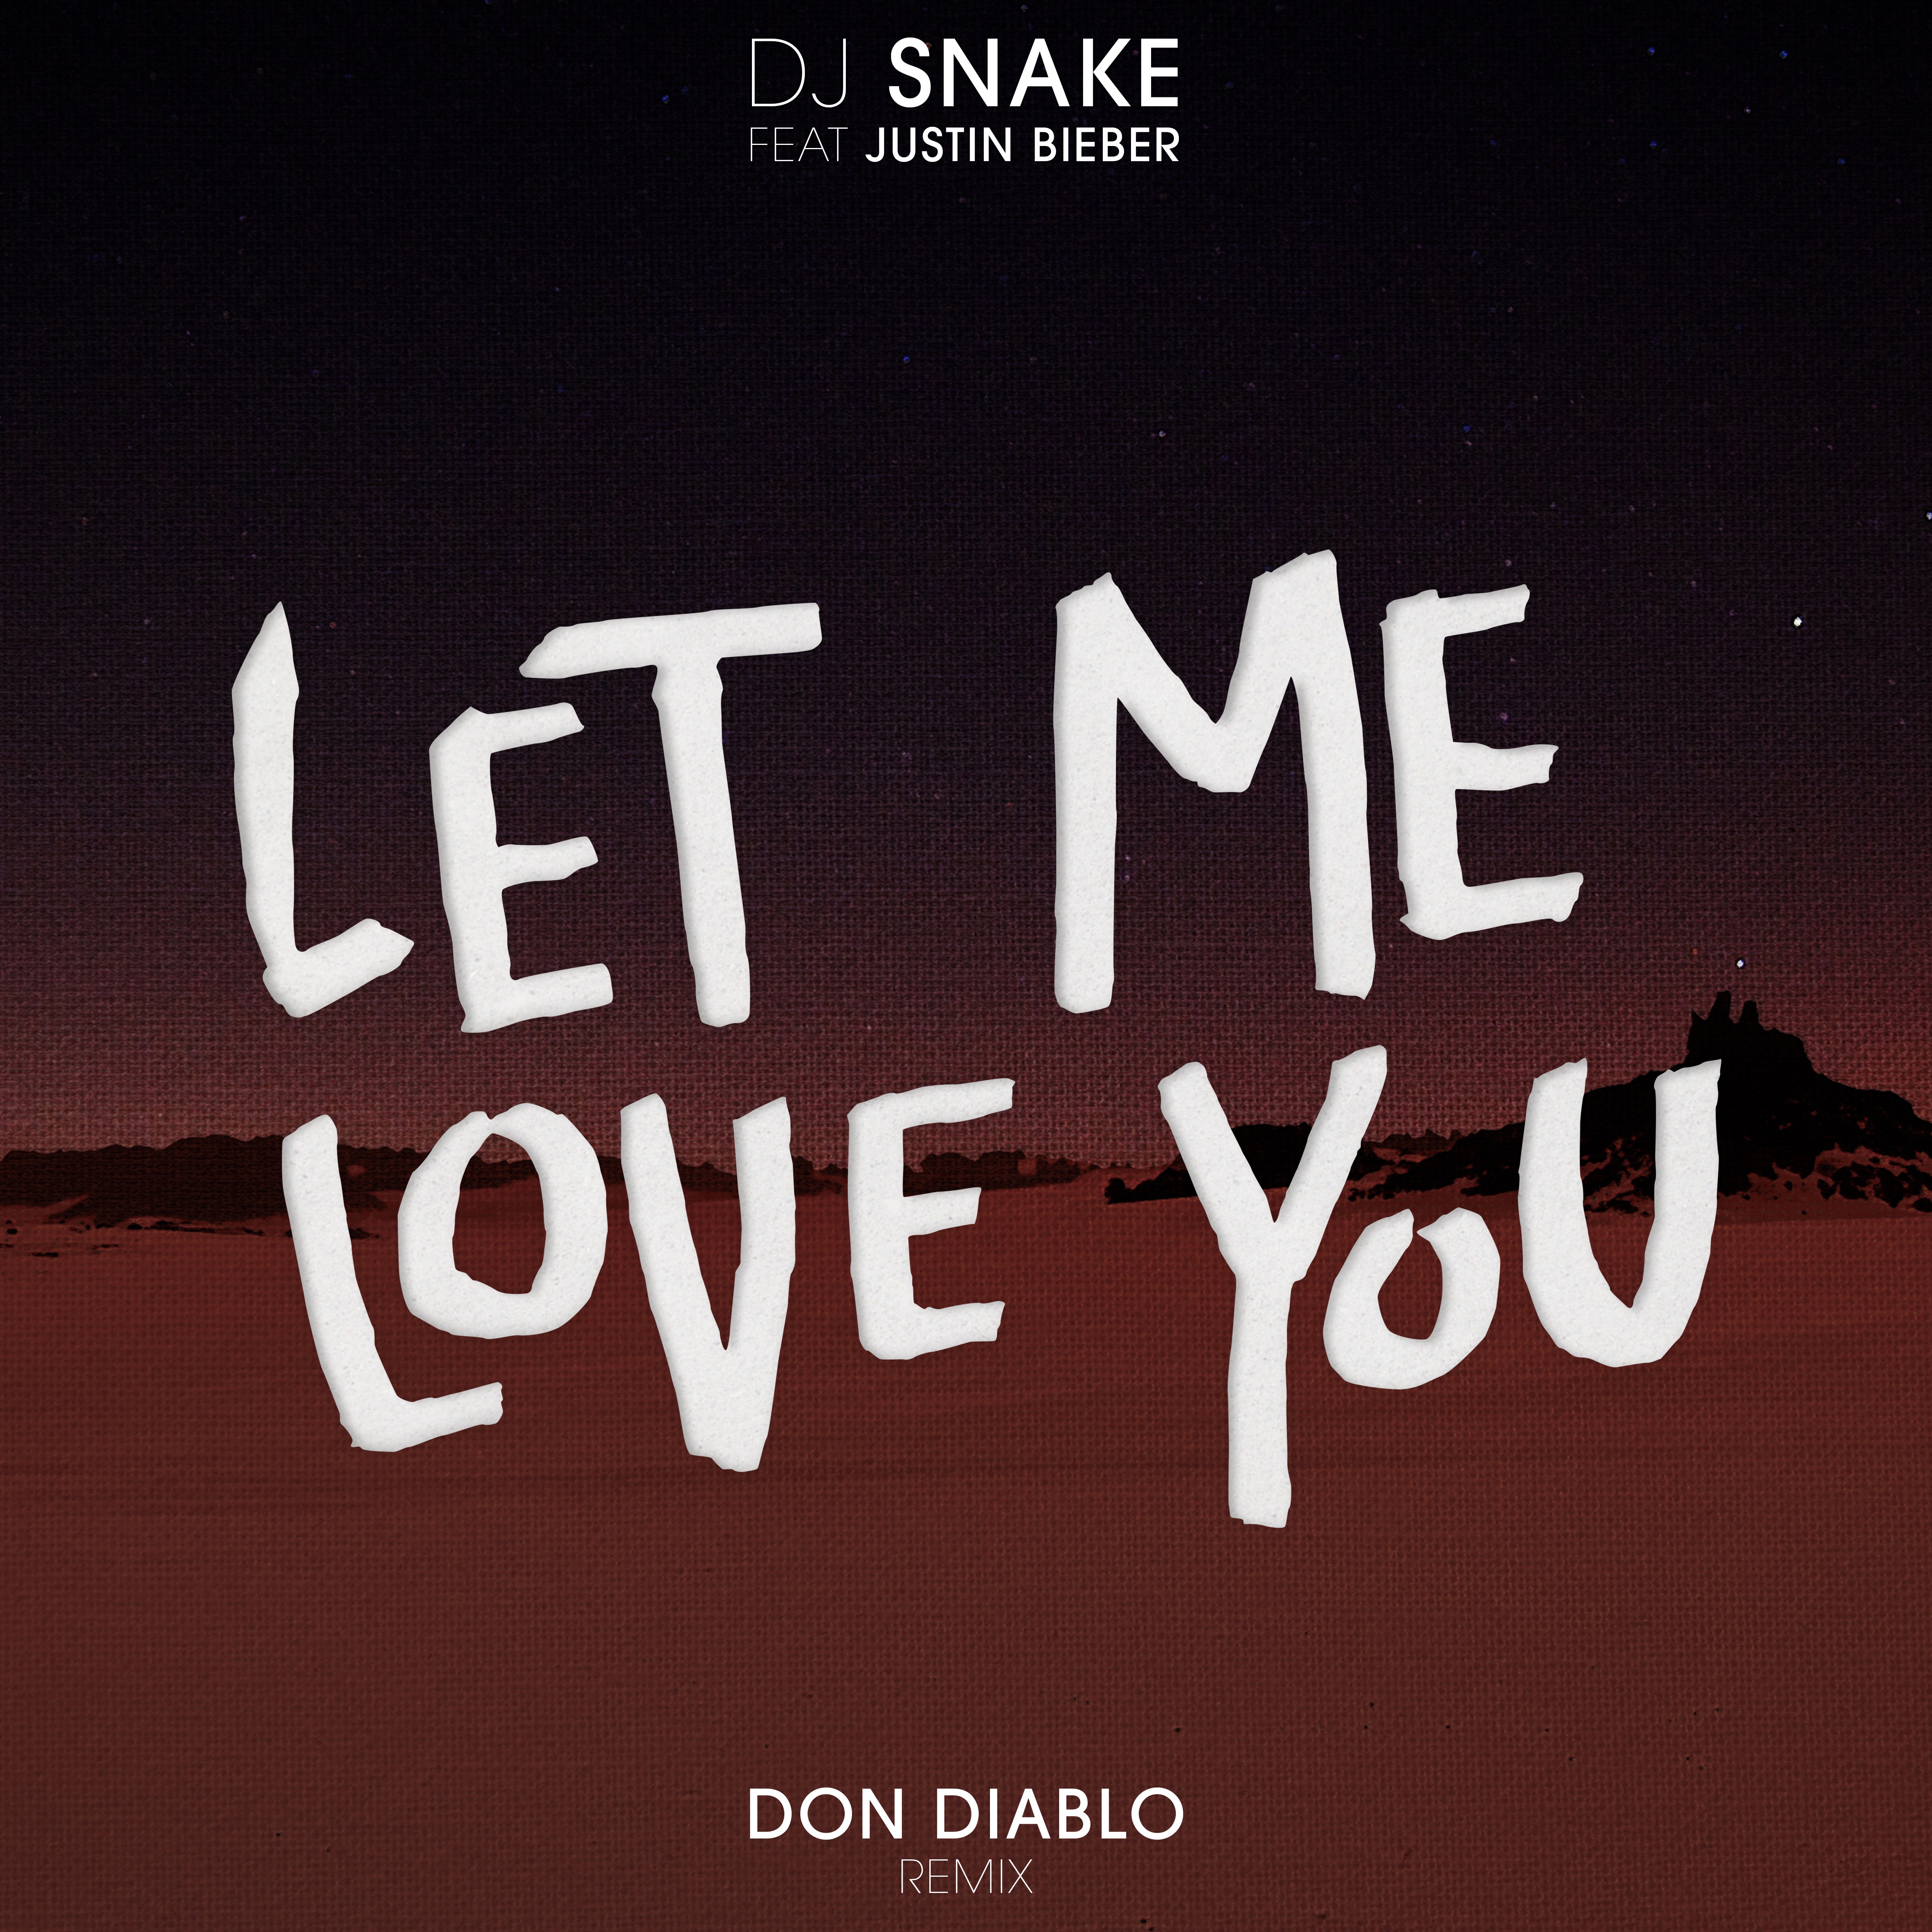 DJ Snake ft. Justin Bieber - Let Me Love You (Don Diablo Remix)